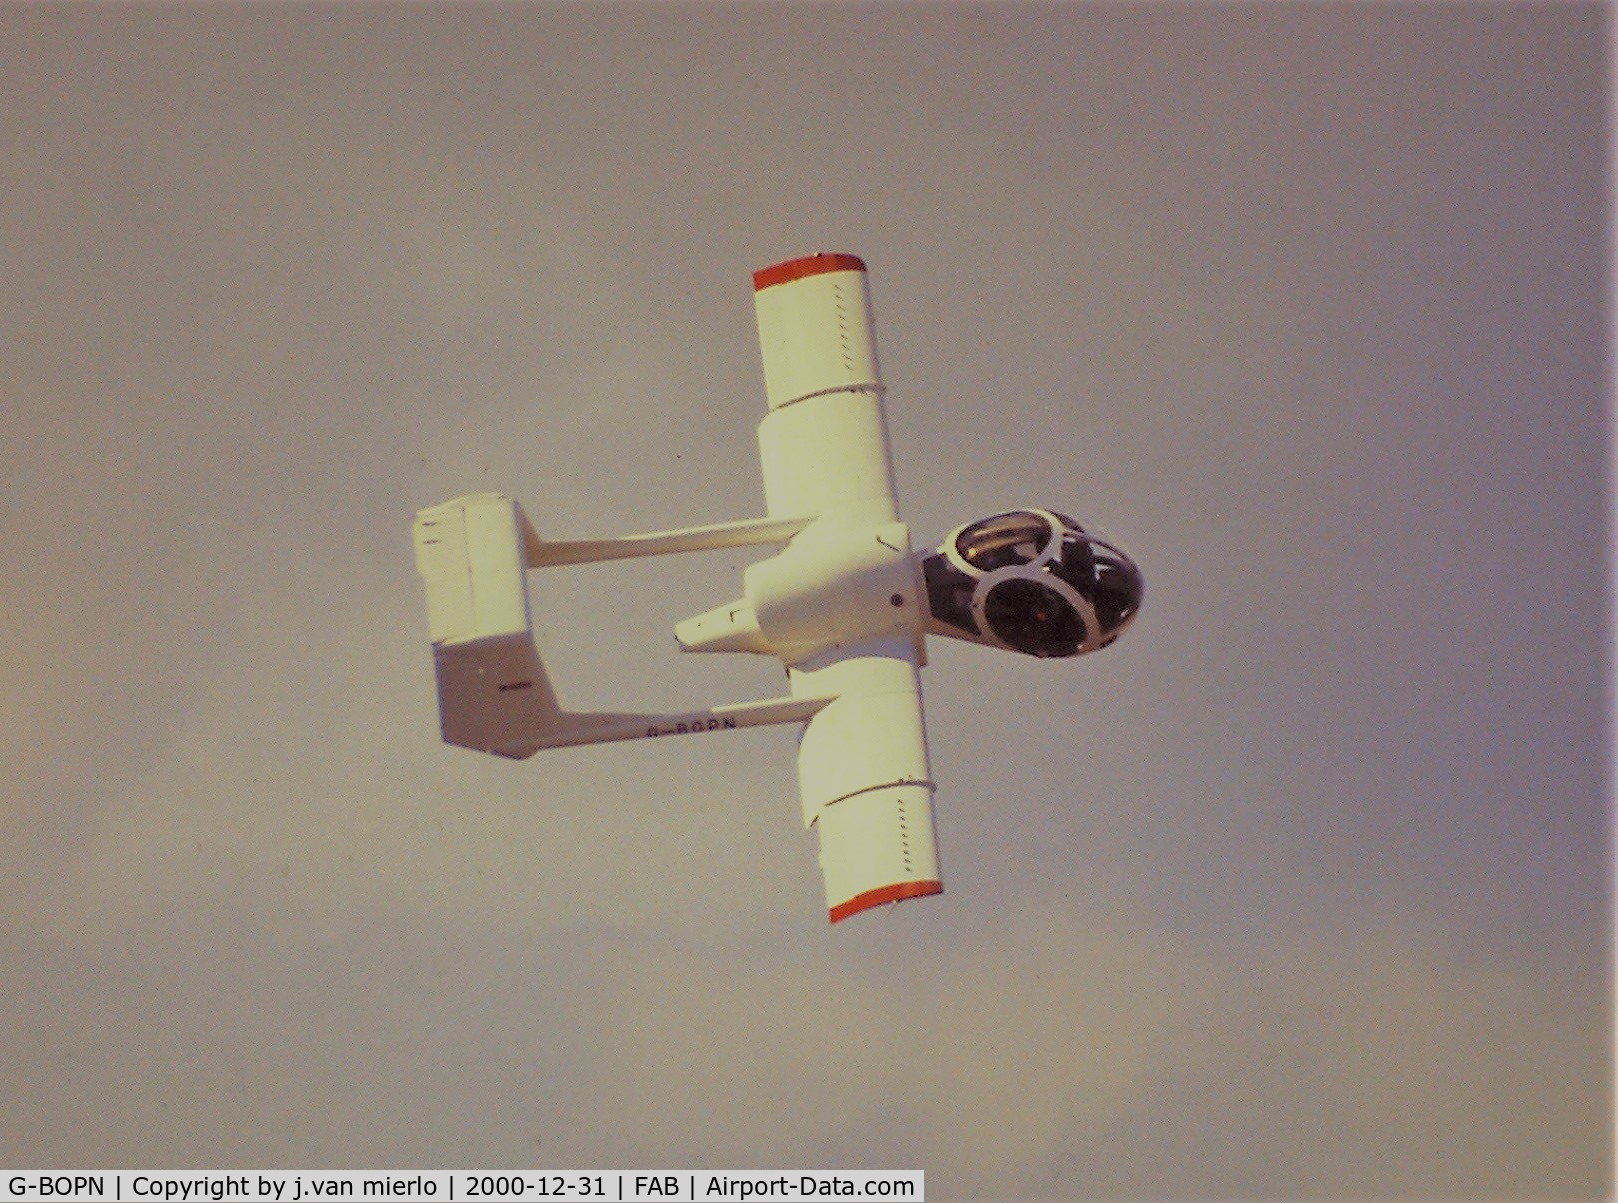 G-BOPN, 1990 Brooklands Aerospace Optica Srs 301 C/N 020, scan from slide